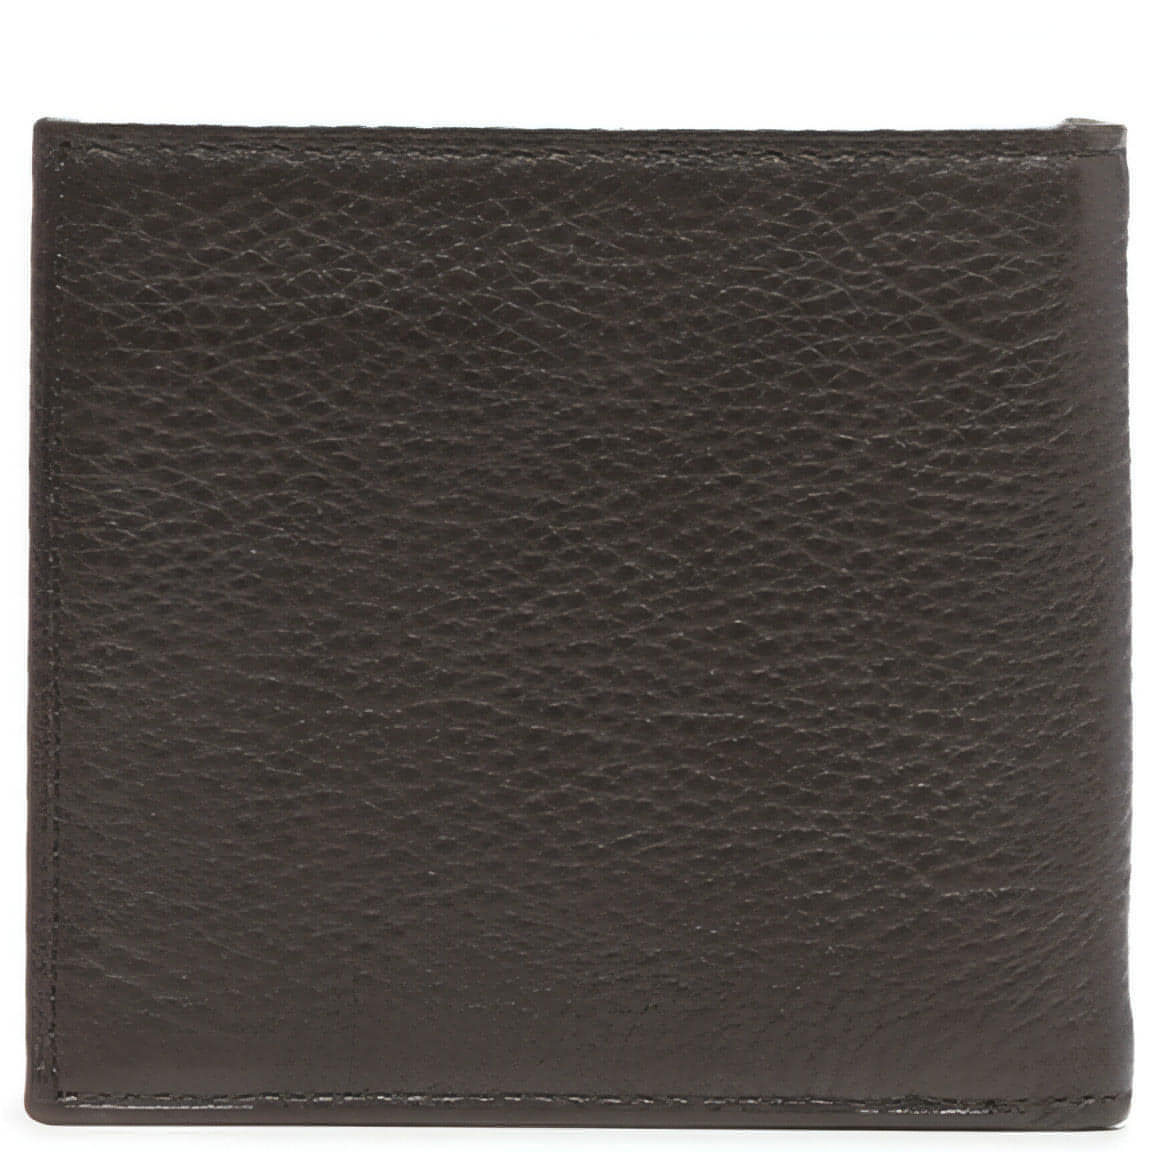 POLO RALPH LAUREN vyriška ruda piniginė Smooth leather wallet